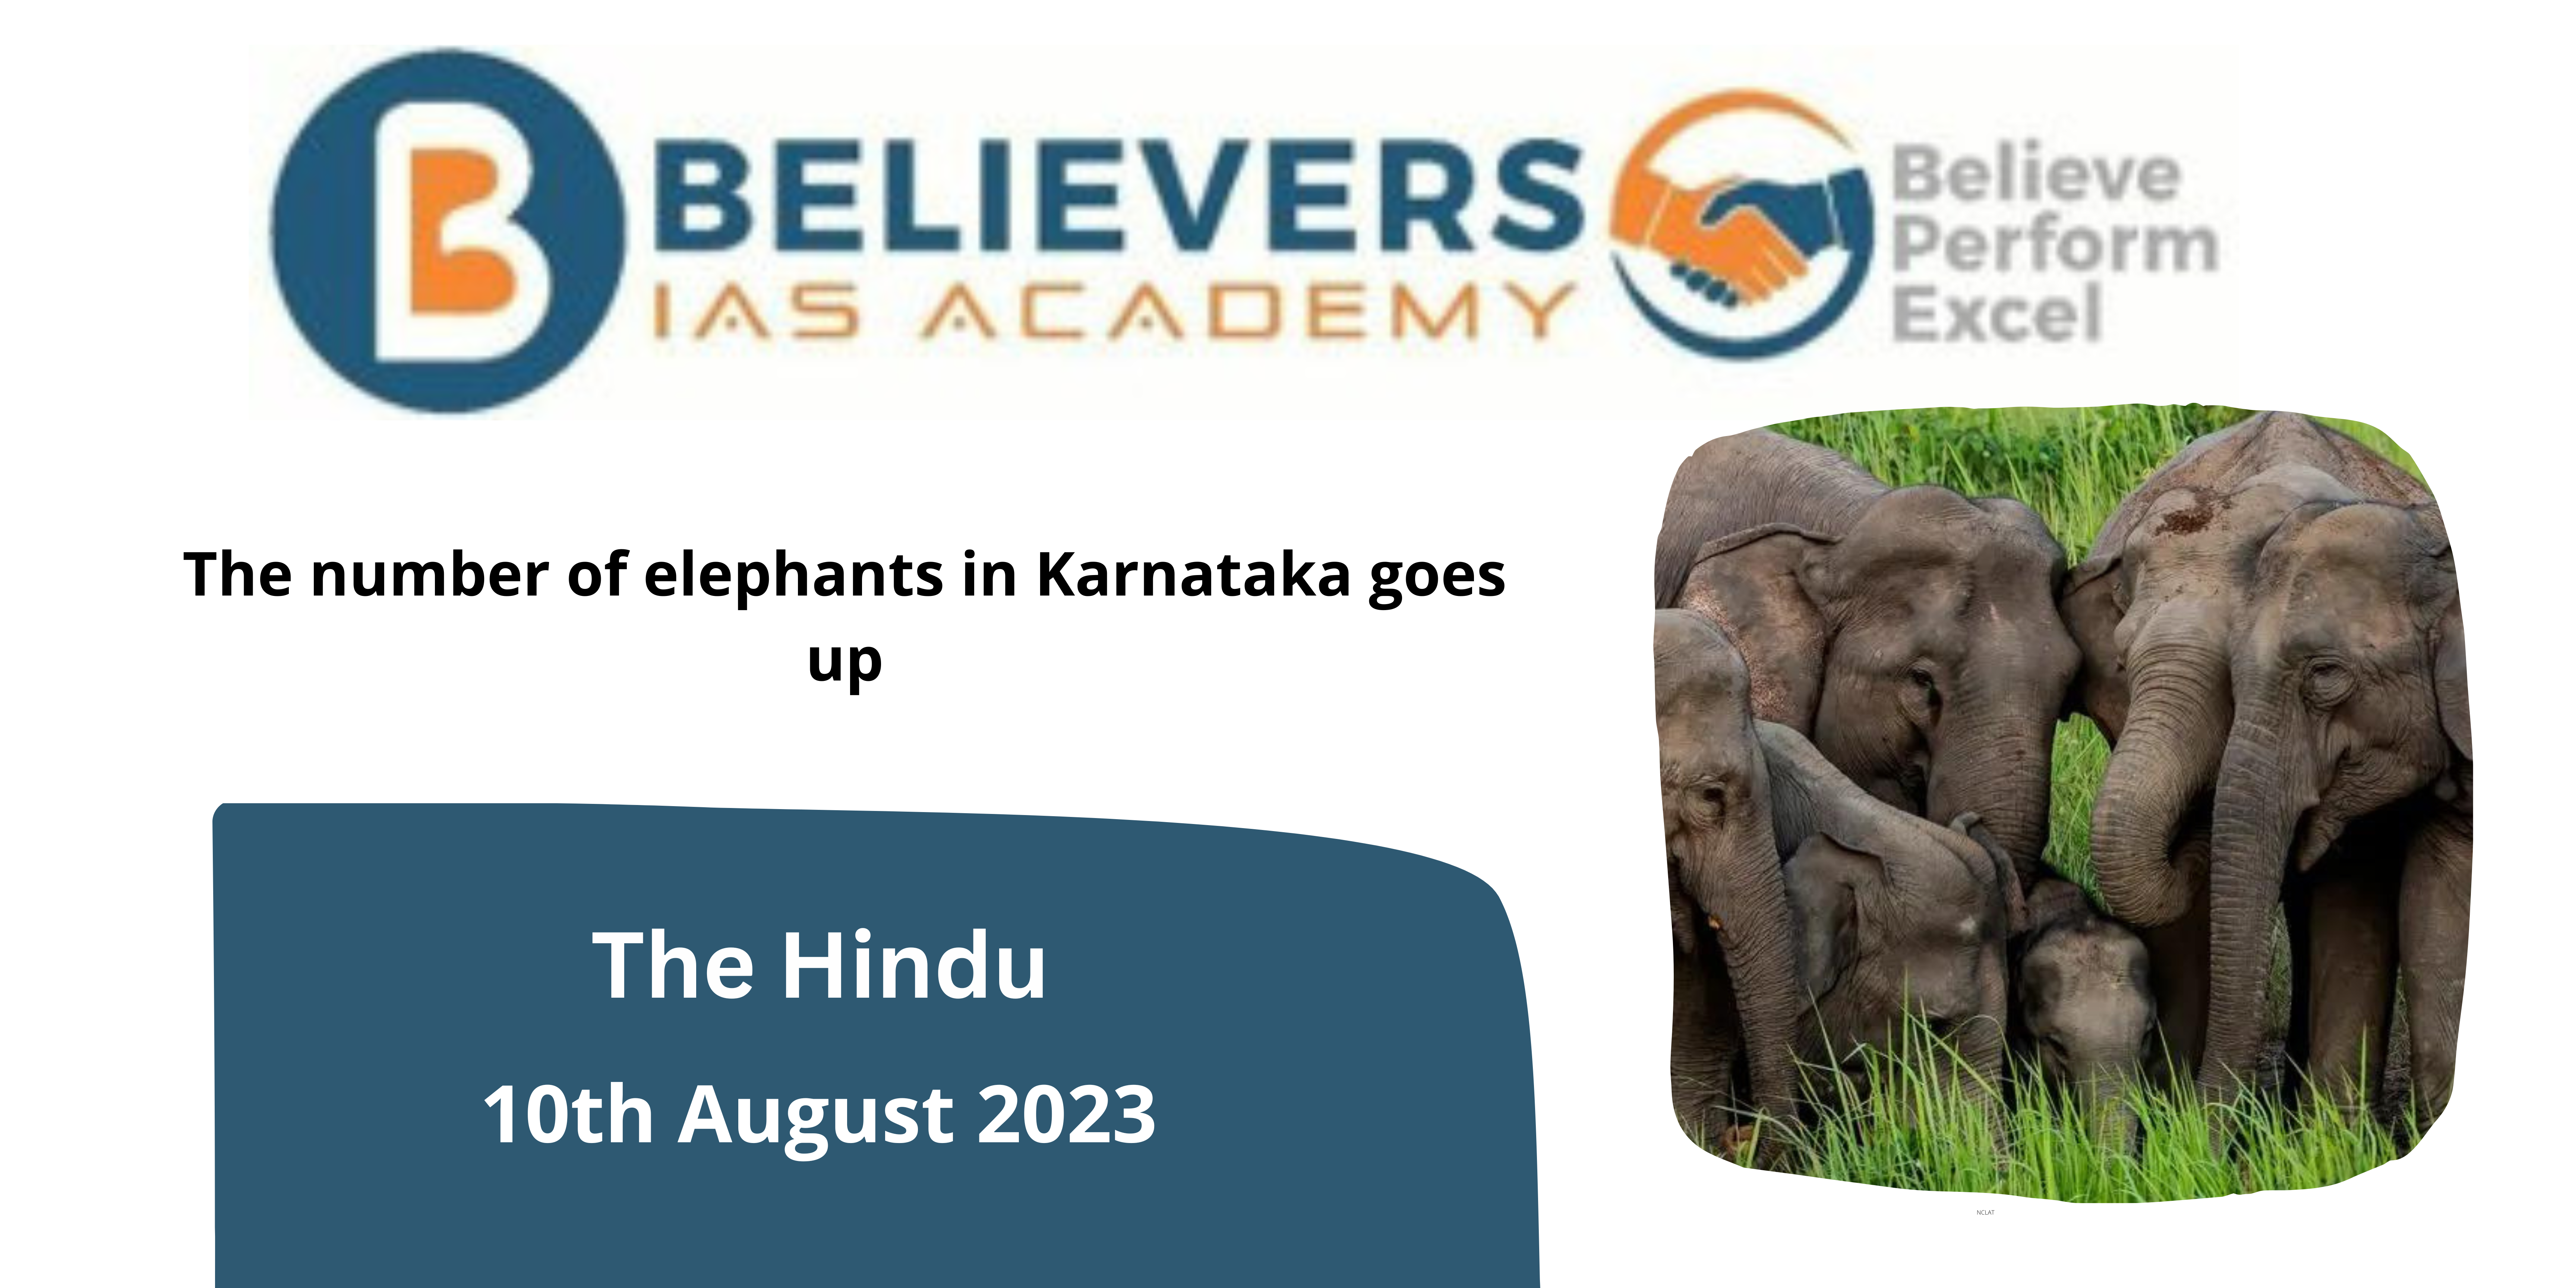 The number of elephants in Karnataka goes up